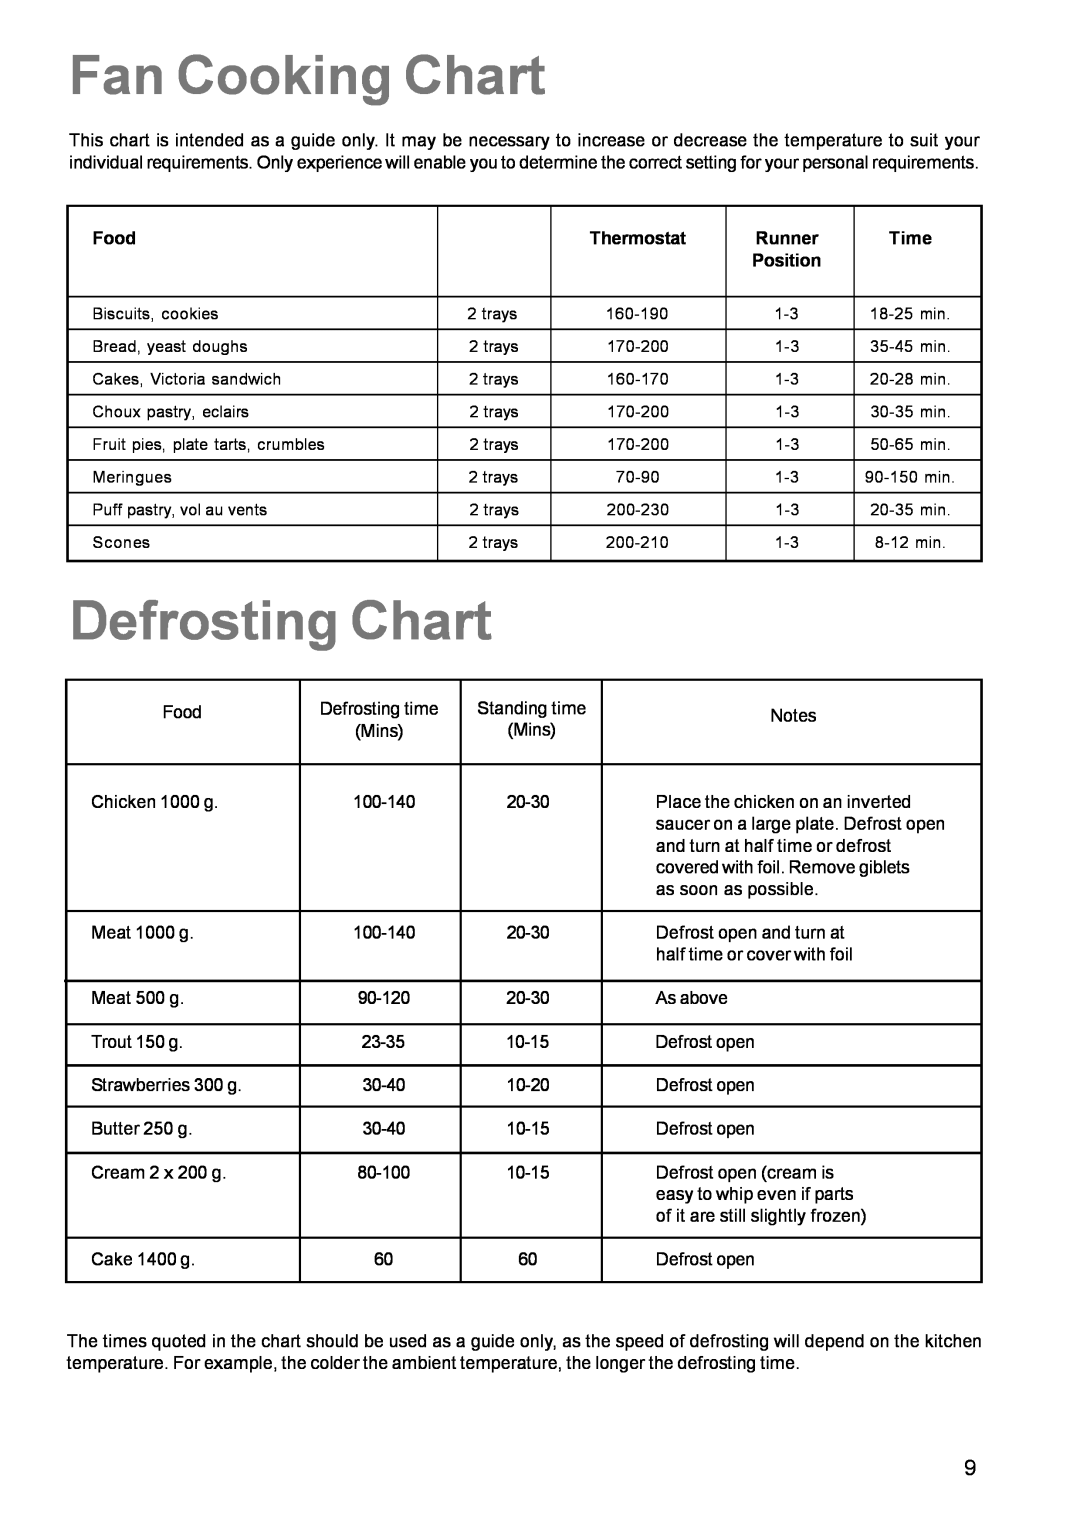 Parkinson Cowan CSIM 509 manual Fan Cooking Chart, Defrosting Chart 